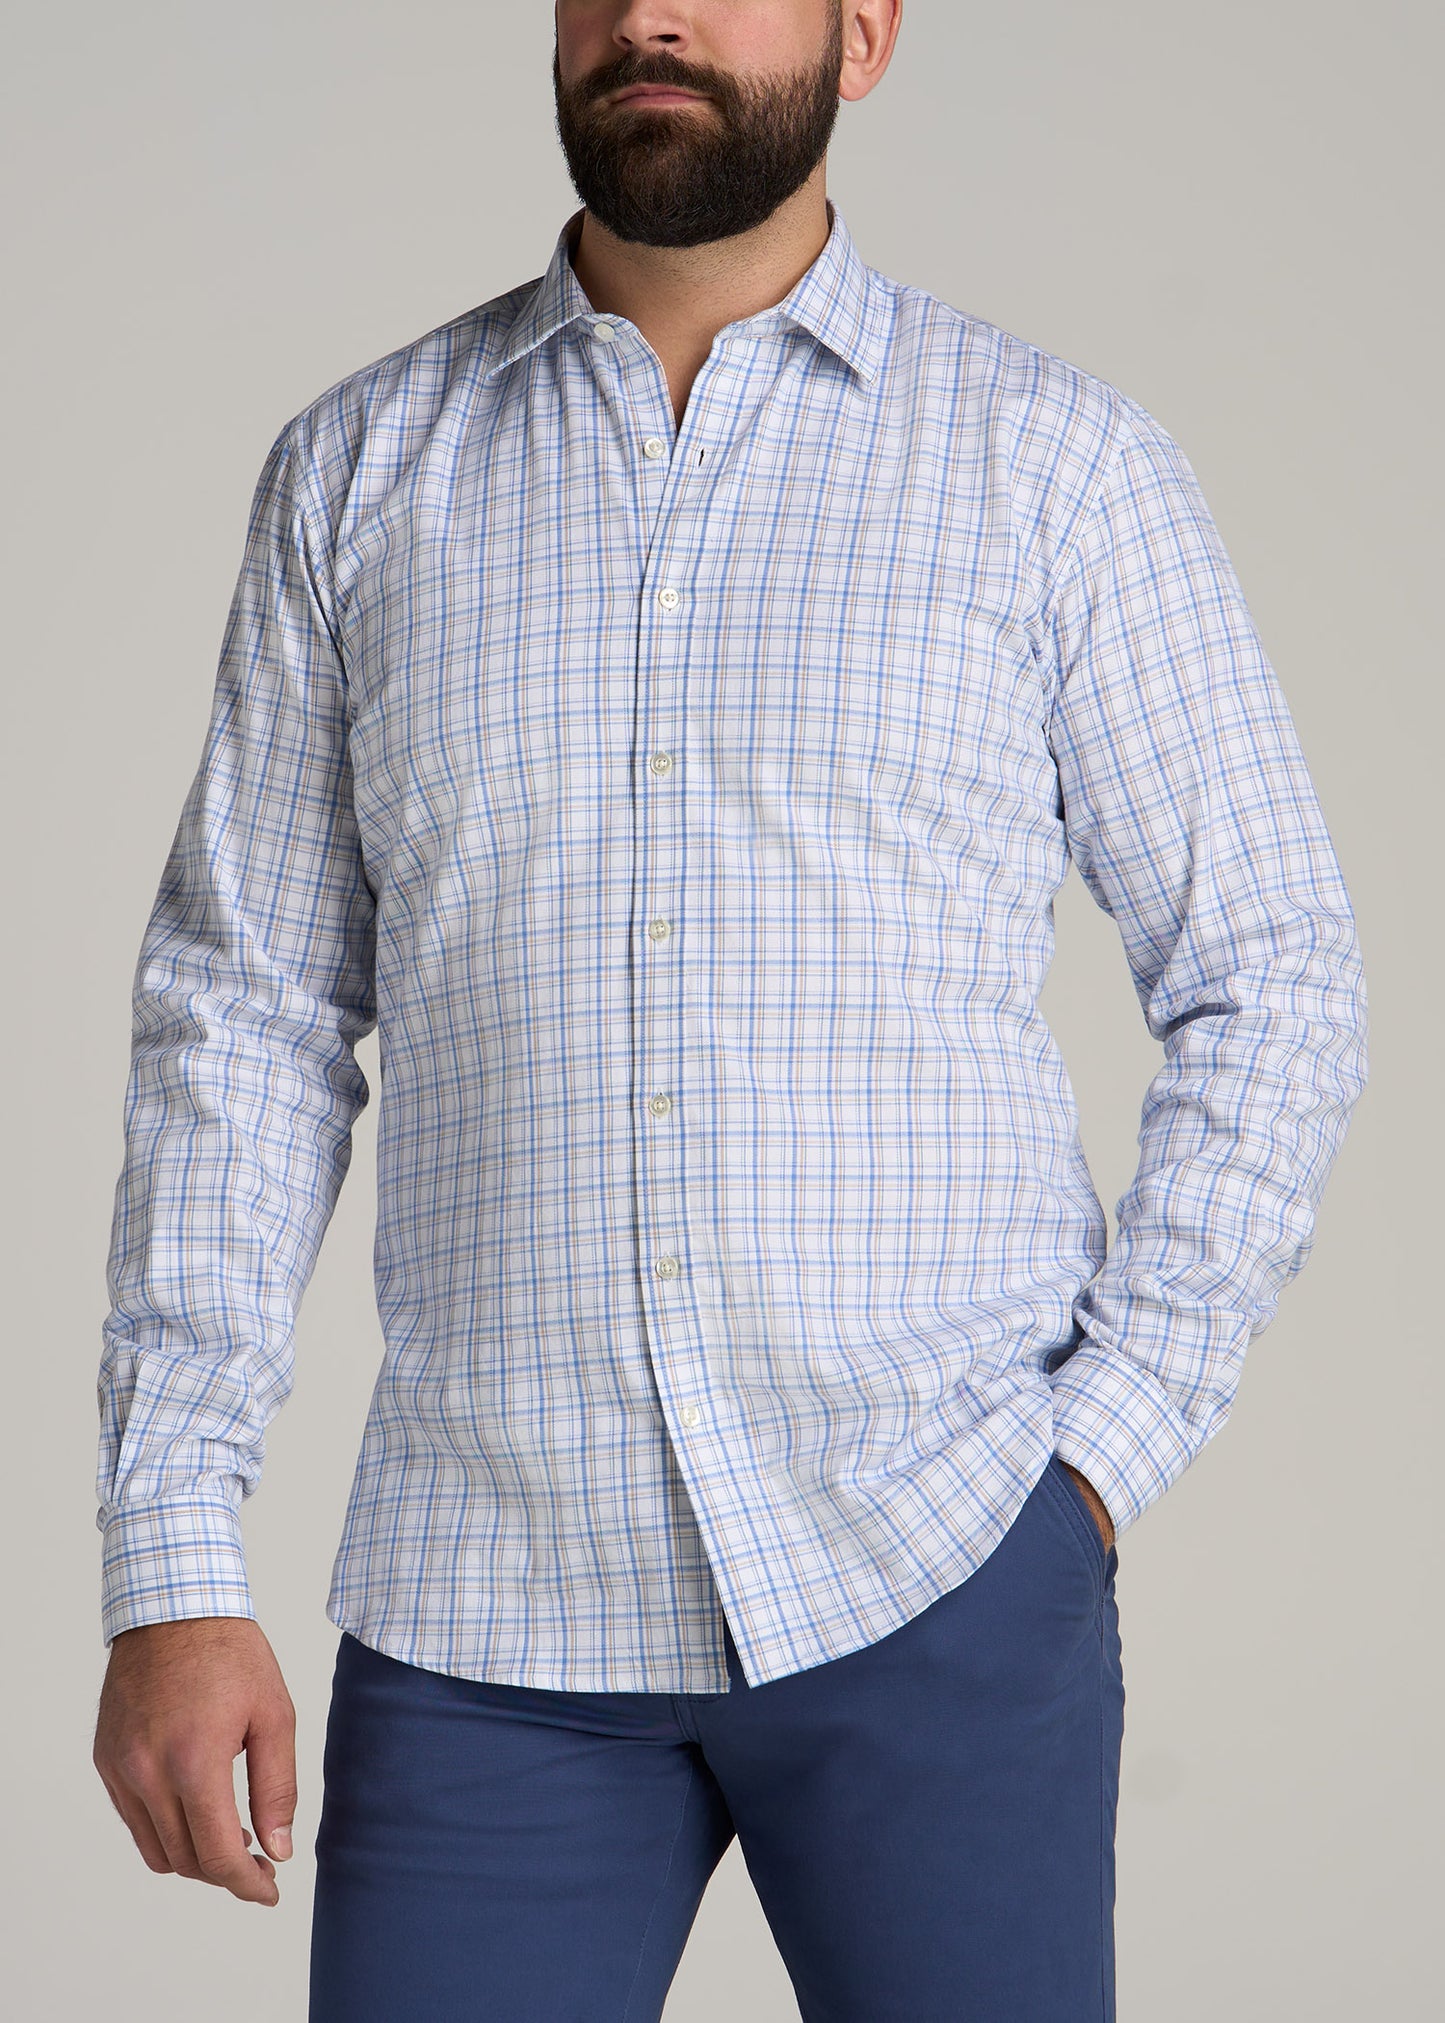 Oskar Button-Up Shirt for Tall Men in Soft Blue and Beige Plaid